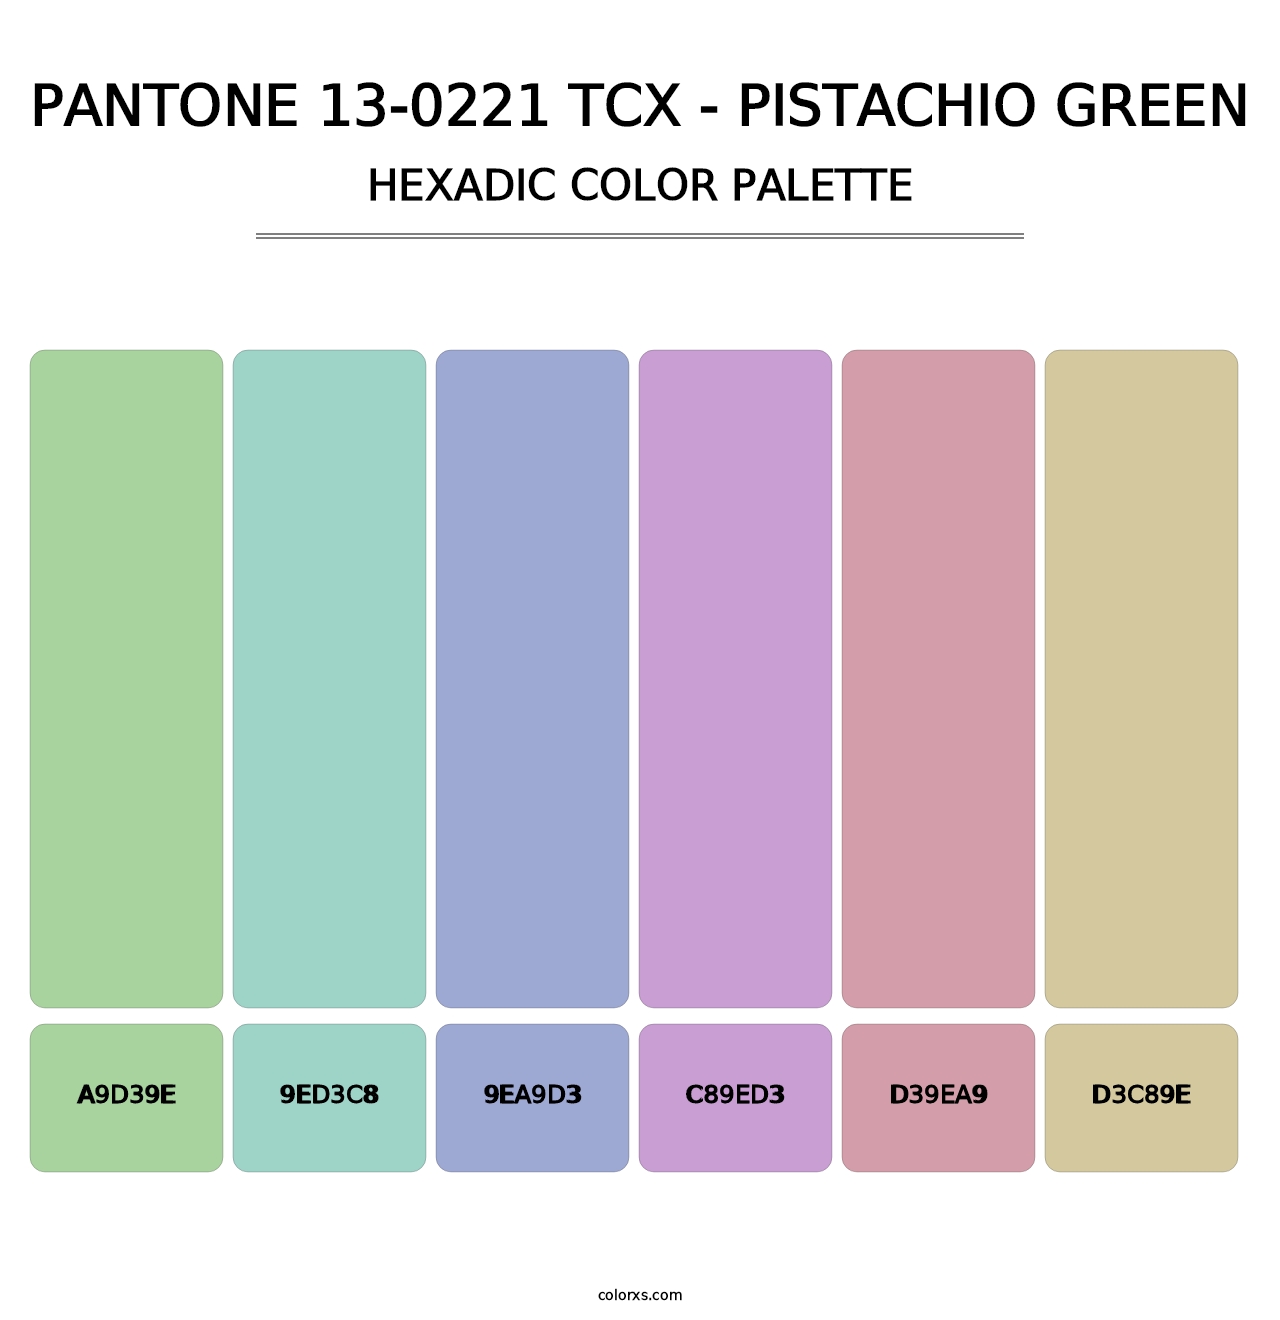 PANTONE 13-0221 TCX - Pistachio Green - Hexadic Color Palette